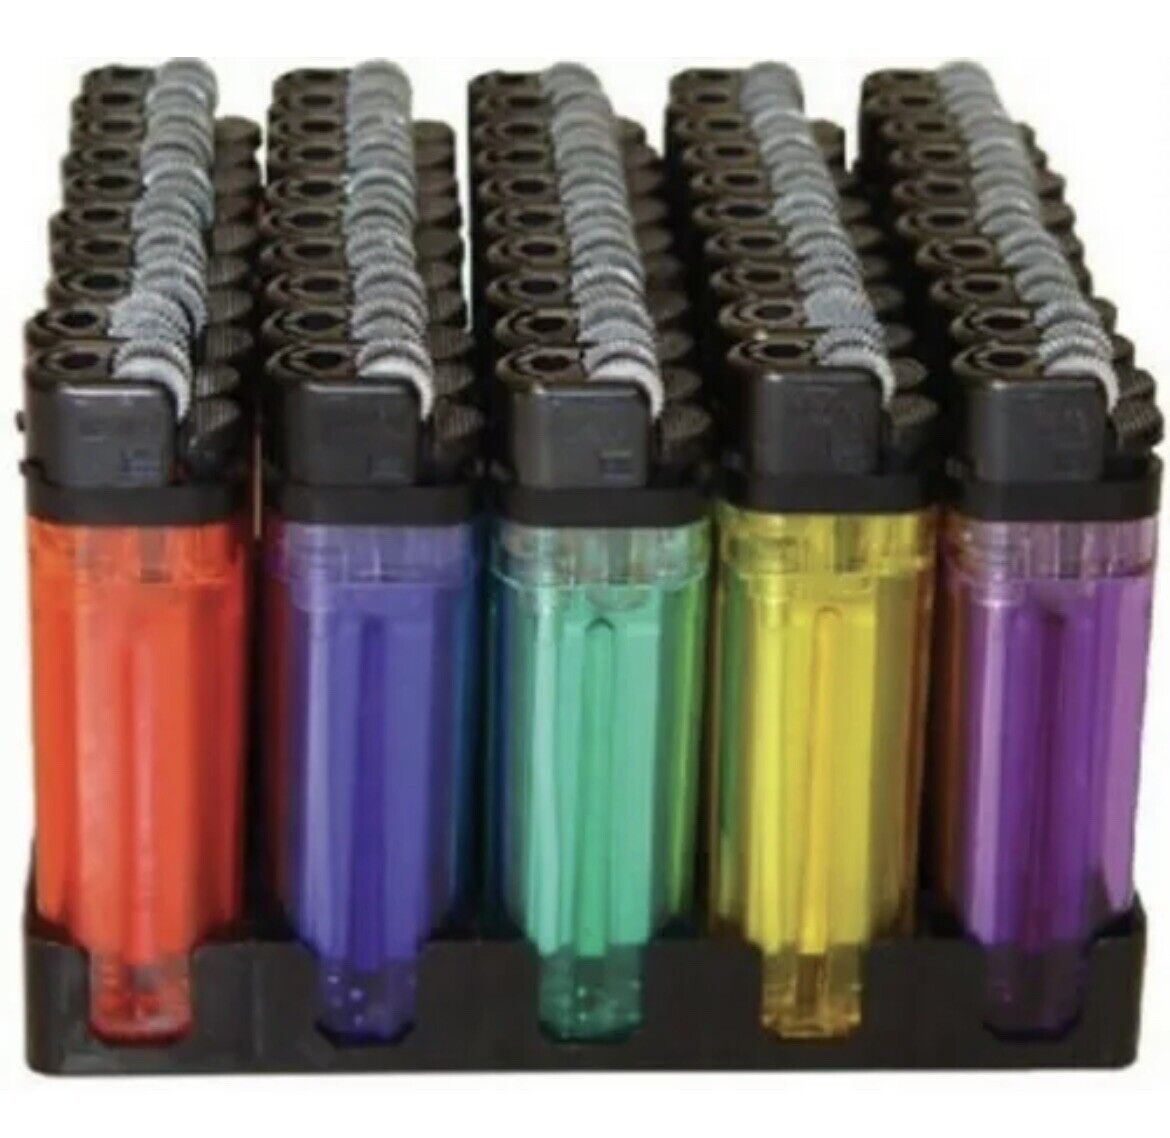 100 Bulk Disposable Lighters - Multicolored/ Assorted Color - Butane Wholesale